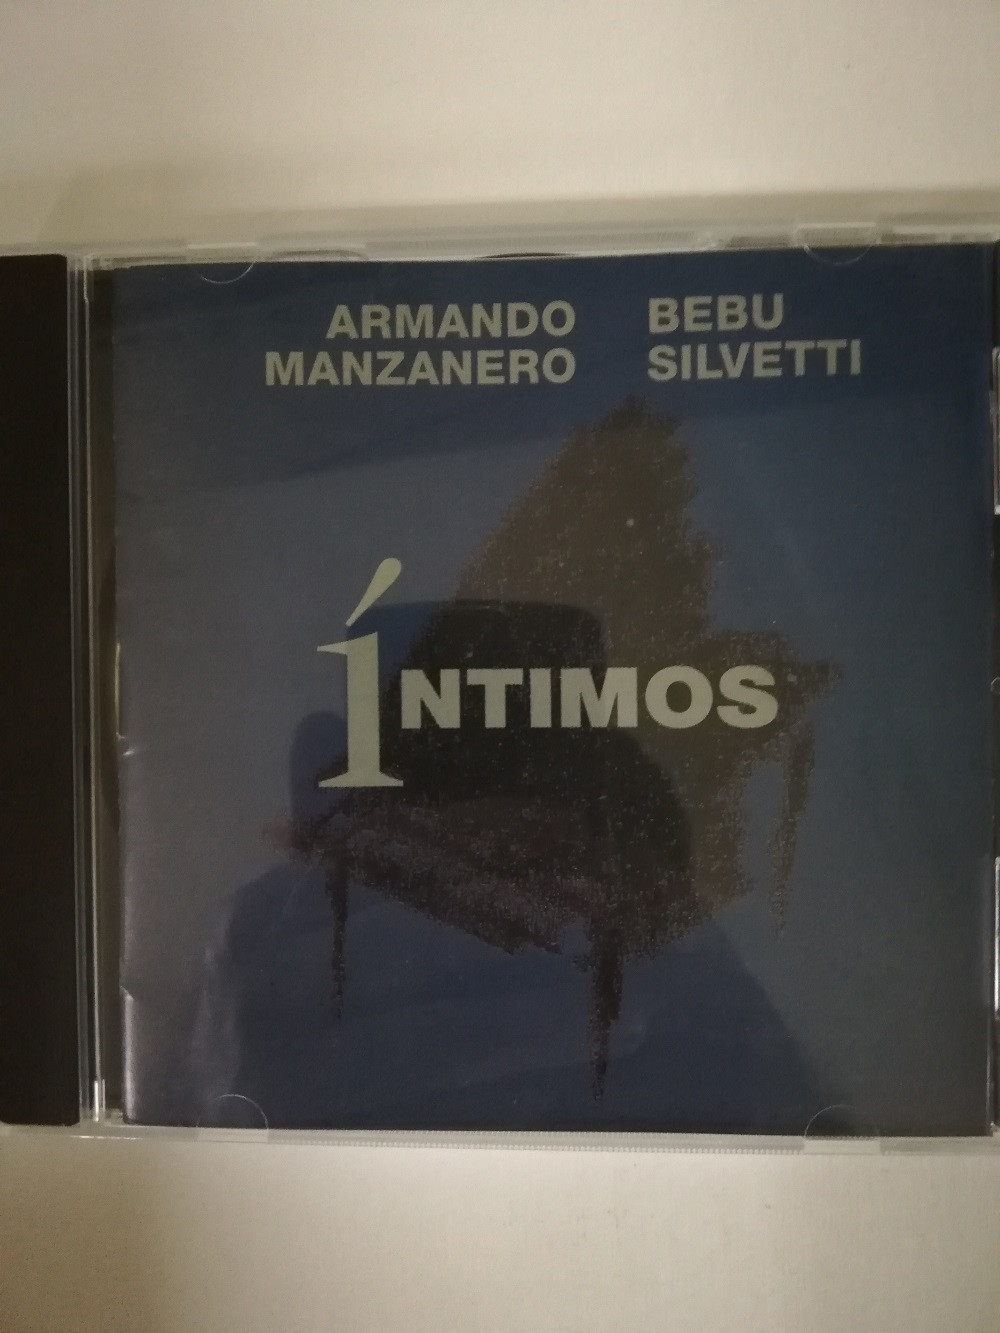 Imagen CD ARMANDO MANZANERO & BEBU SILVETTI - ÍNTIMOS